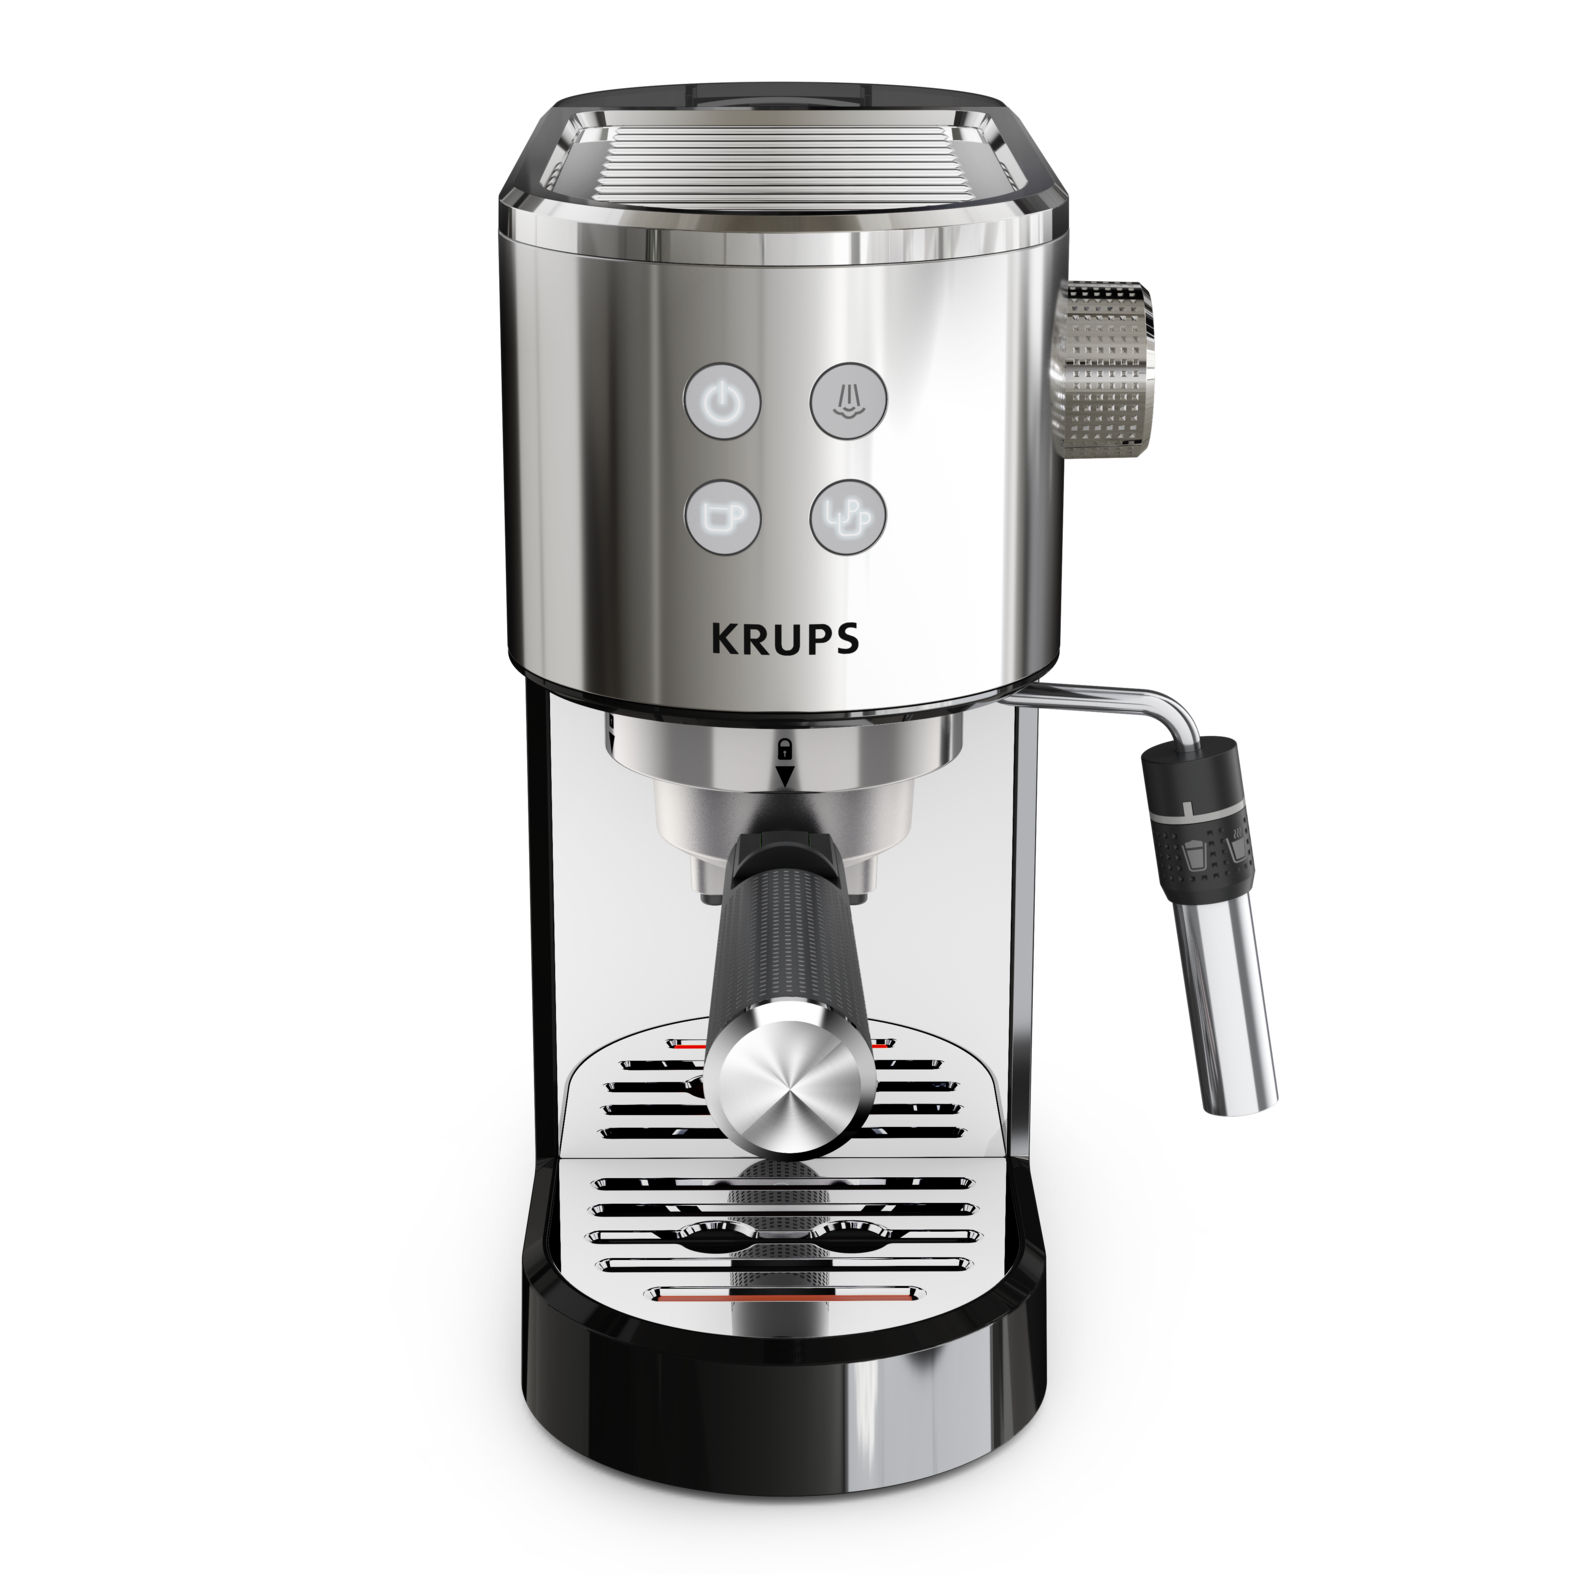 Рожковая кофеварка Virtuoso + XP444C10 рожковая кофеварка xp444c10 с кофемолкой krups fast touch gx204d10